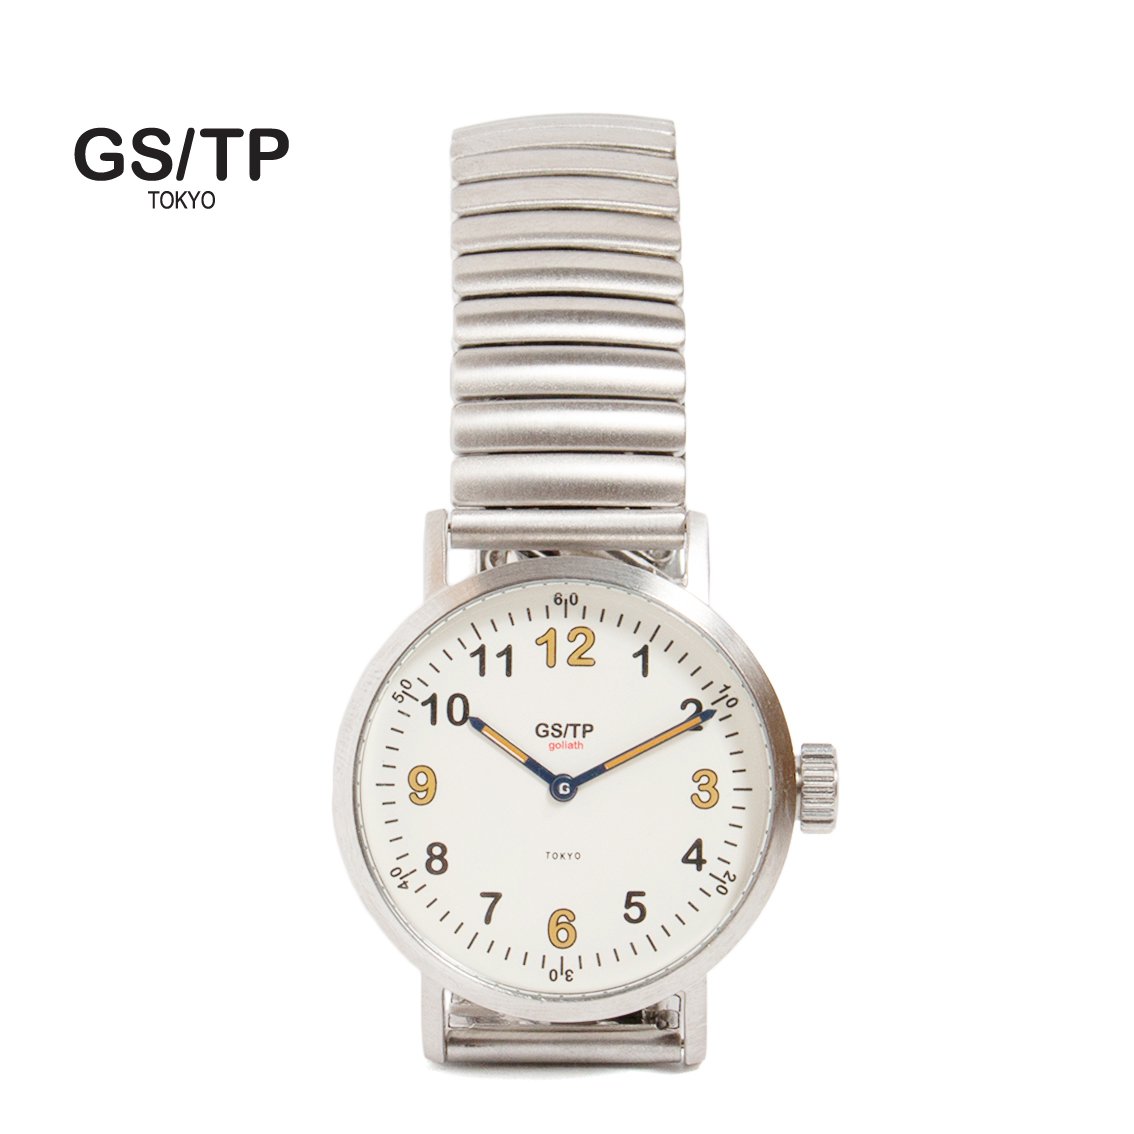 GS/TP ジーエスティーピー] GOLIATH RECORDER DIAL 腕時計 ミリタリー